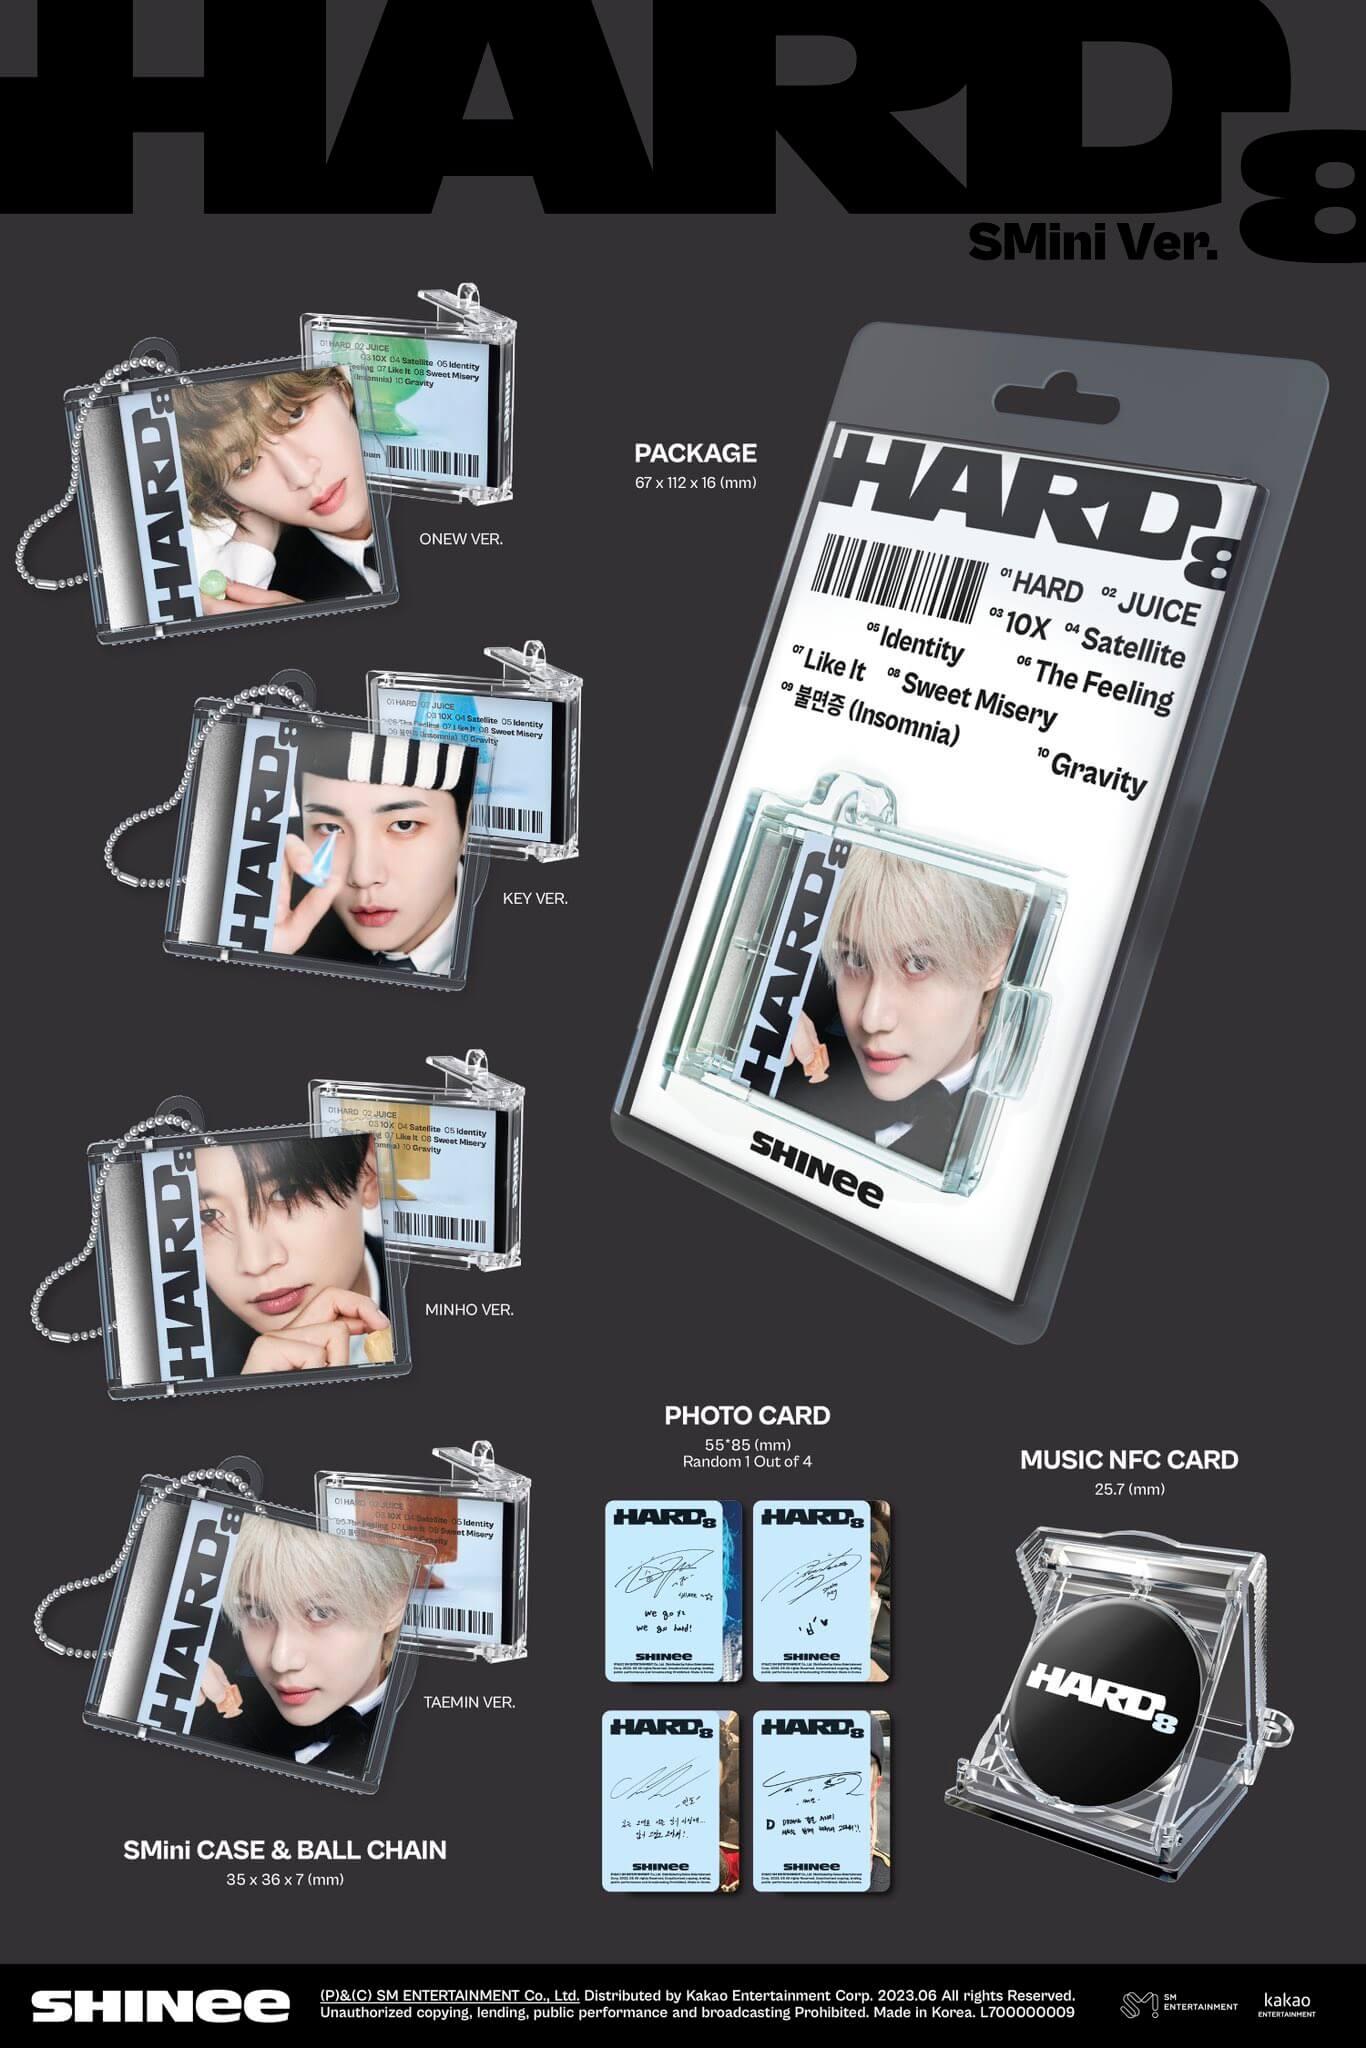 SHINee 8th Full Album HARD - SMini Version Inclusions Package SMini Case & Ball Chain Music NFC Card Photocard